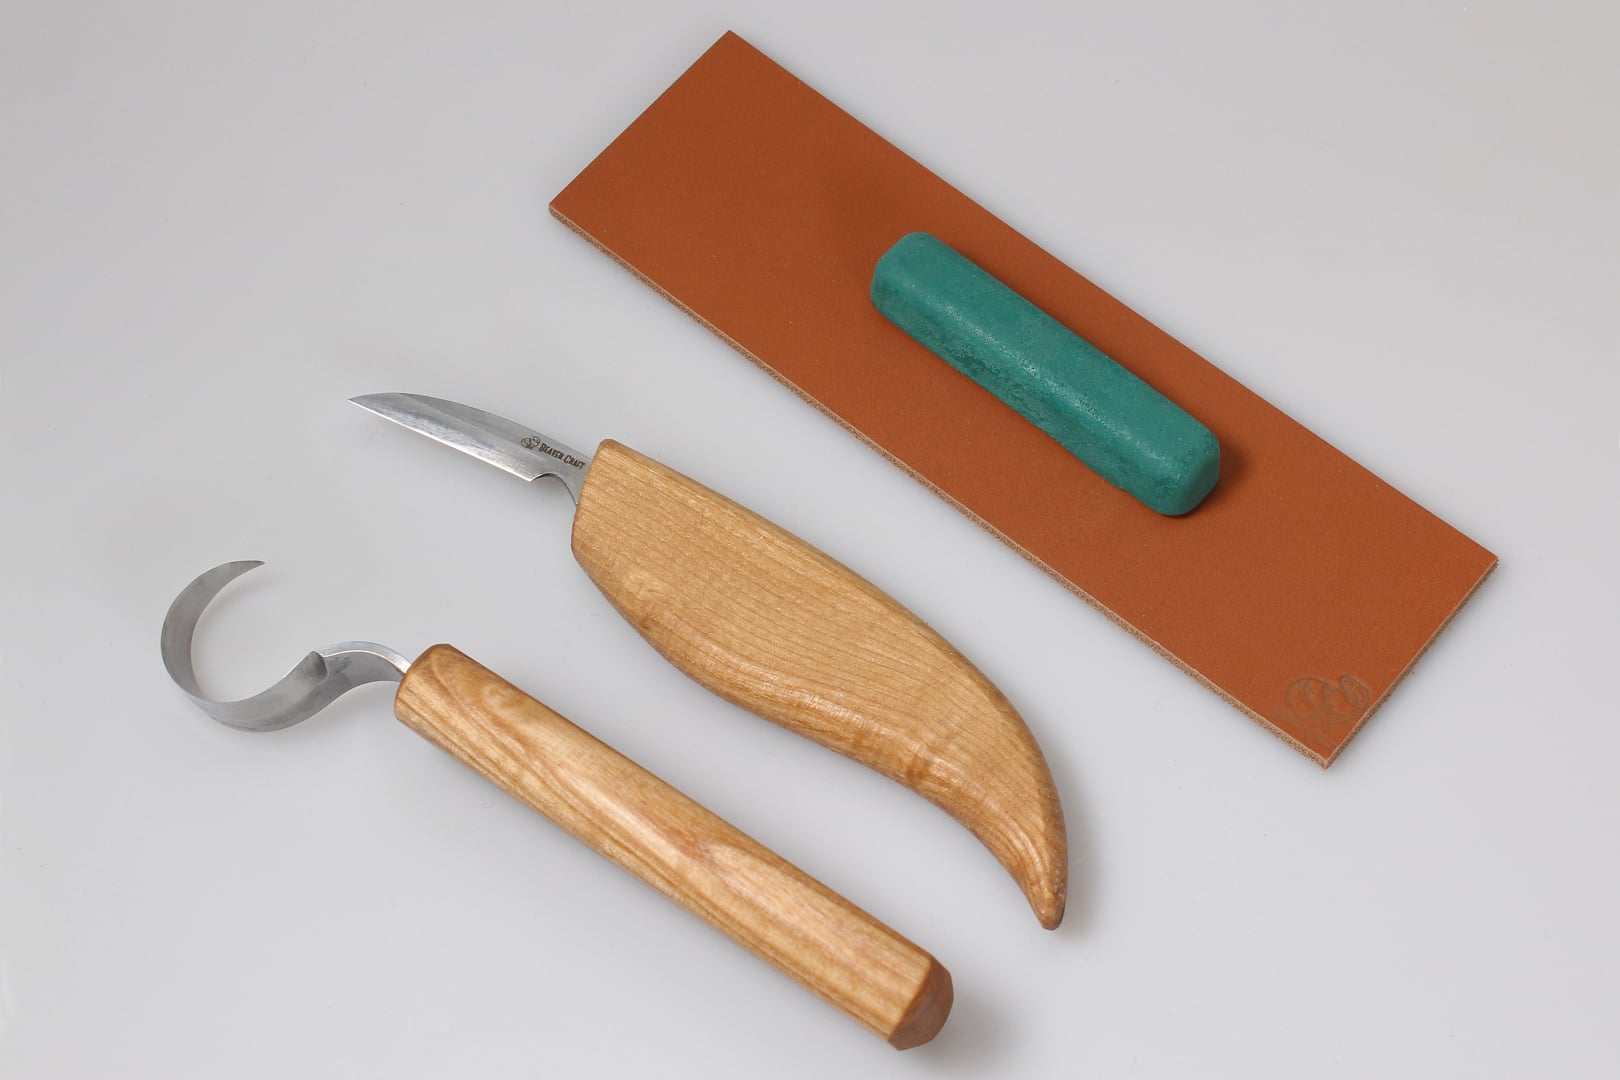 BeaverCraft S01 Wood Spoon Carving Knives Set